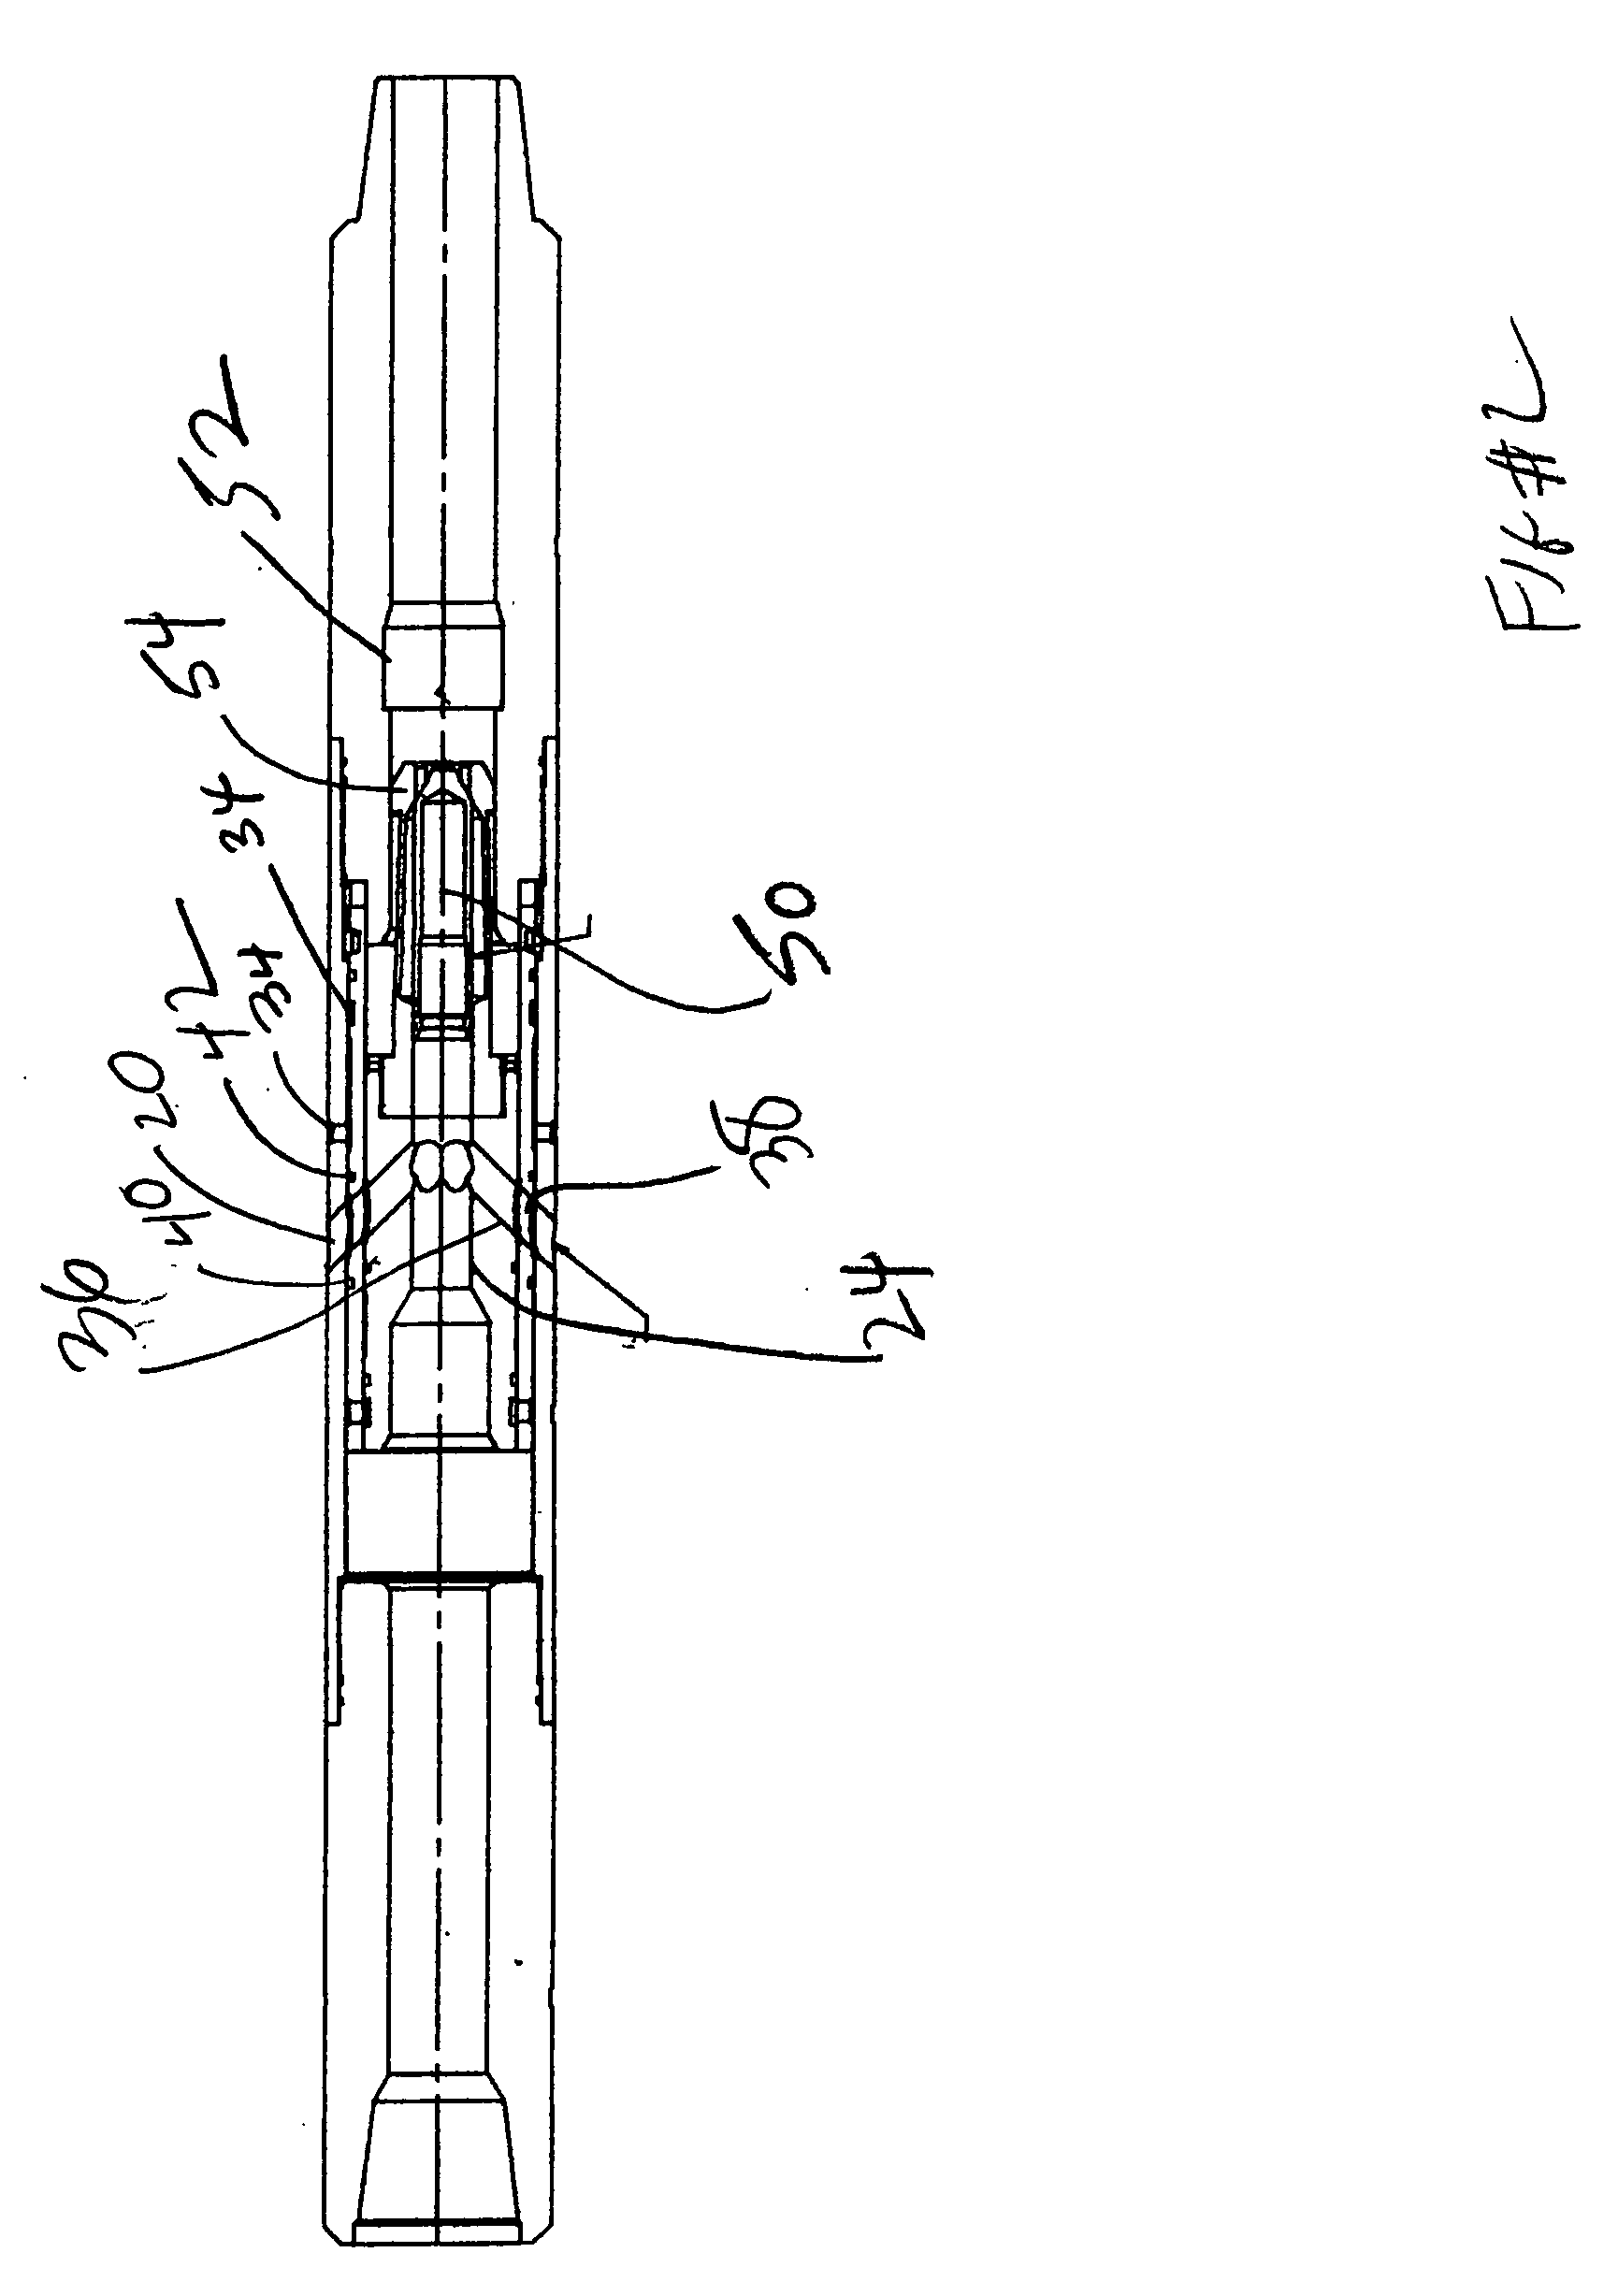 Single cycle dart operated circulation sub